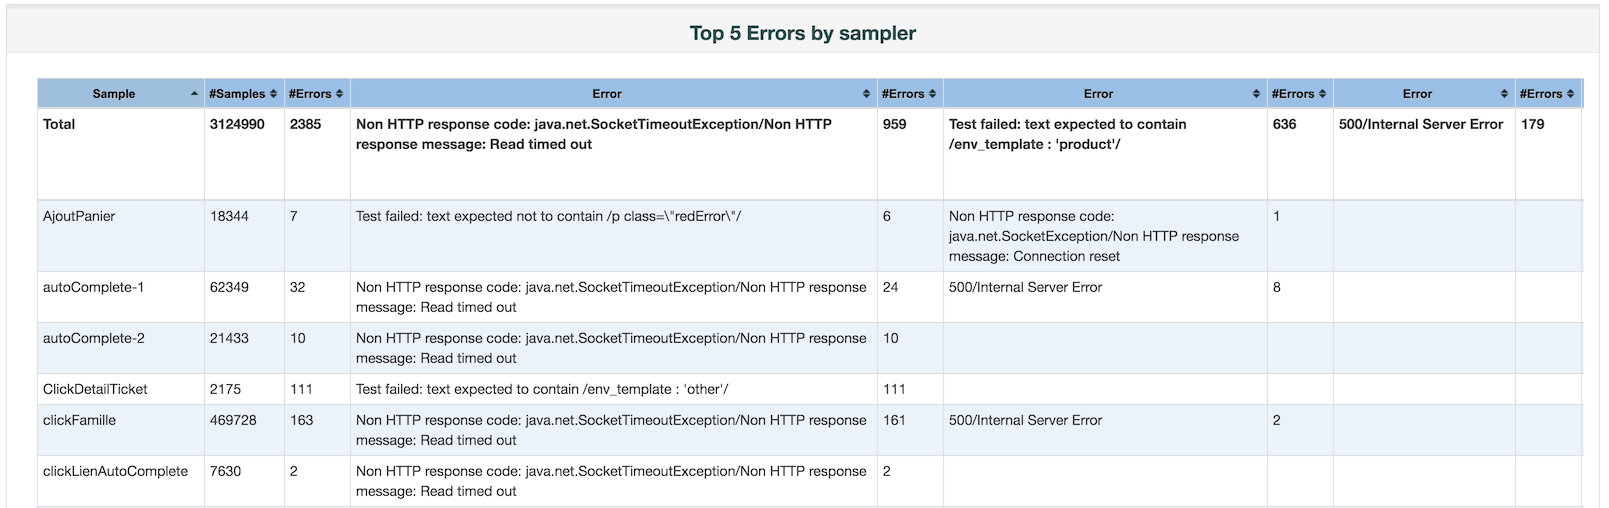 top_5_errors_by_sampler